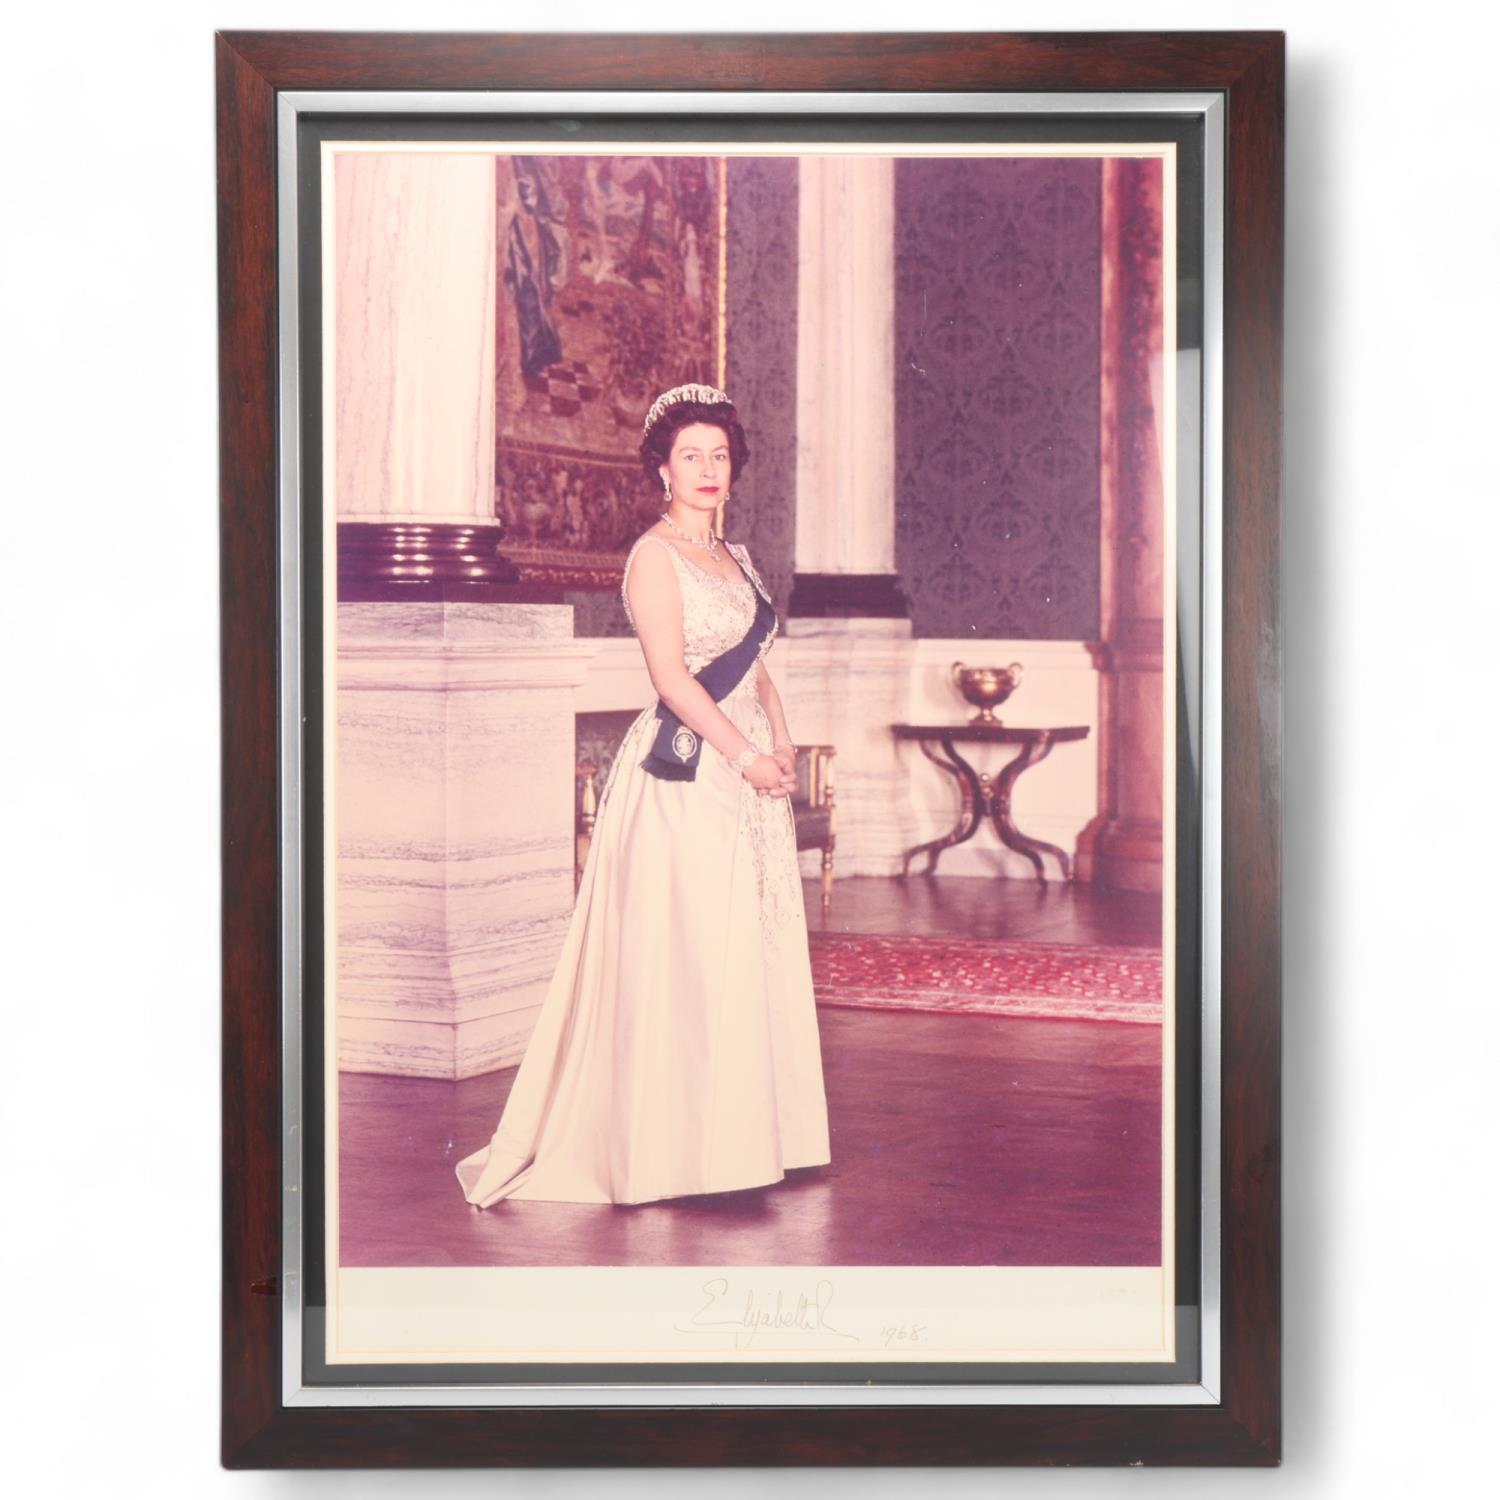 HRH Queen Elizabeth II, full length photographic portrait print, with original ink signature below